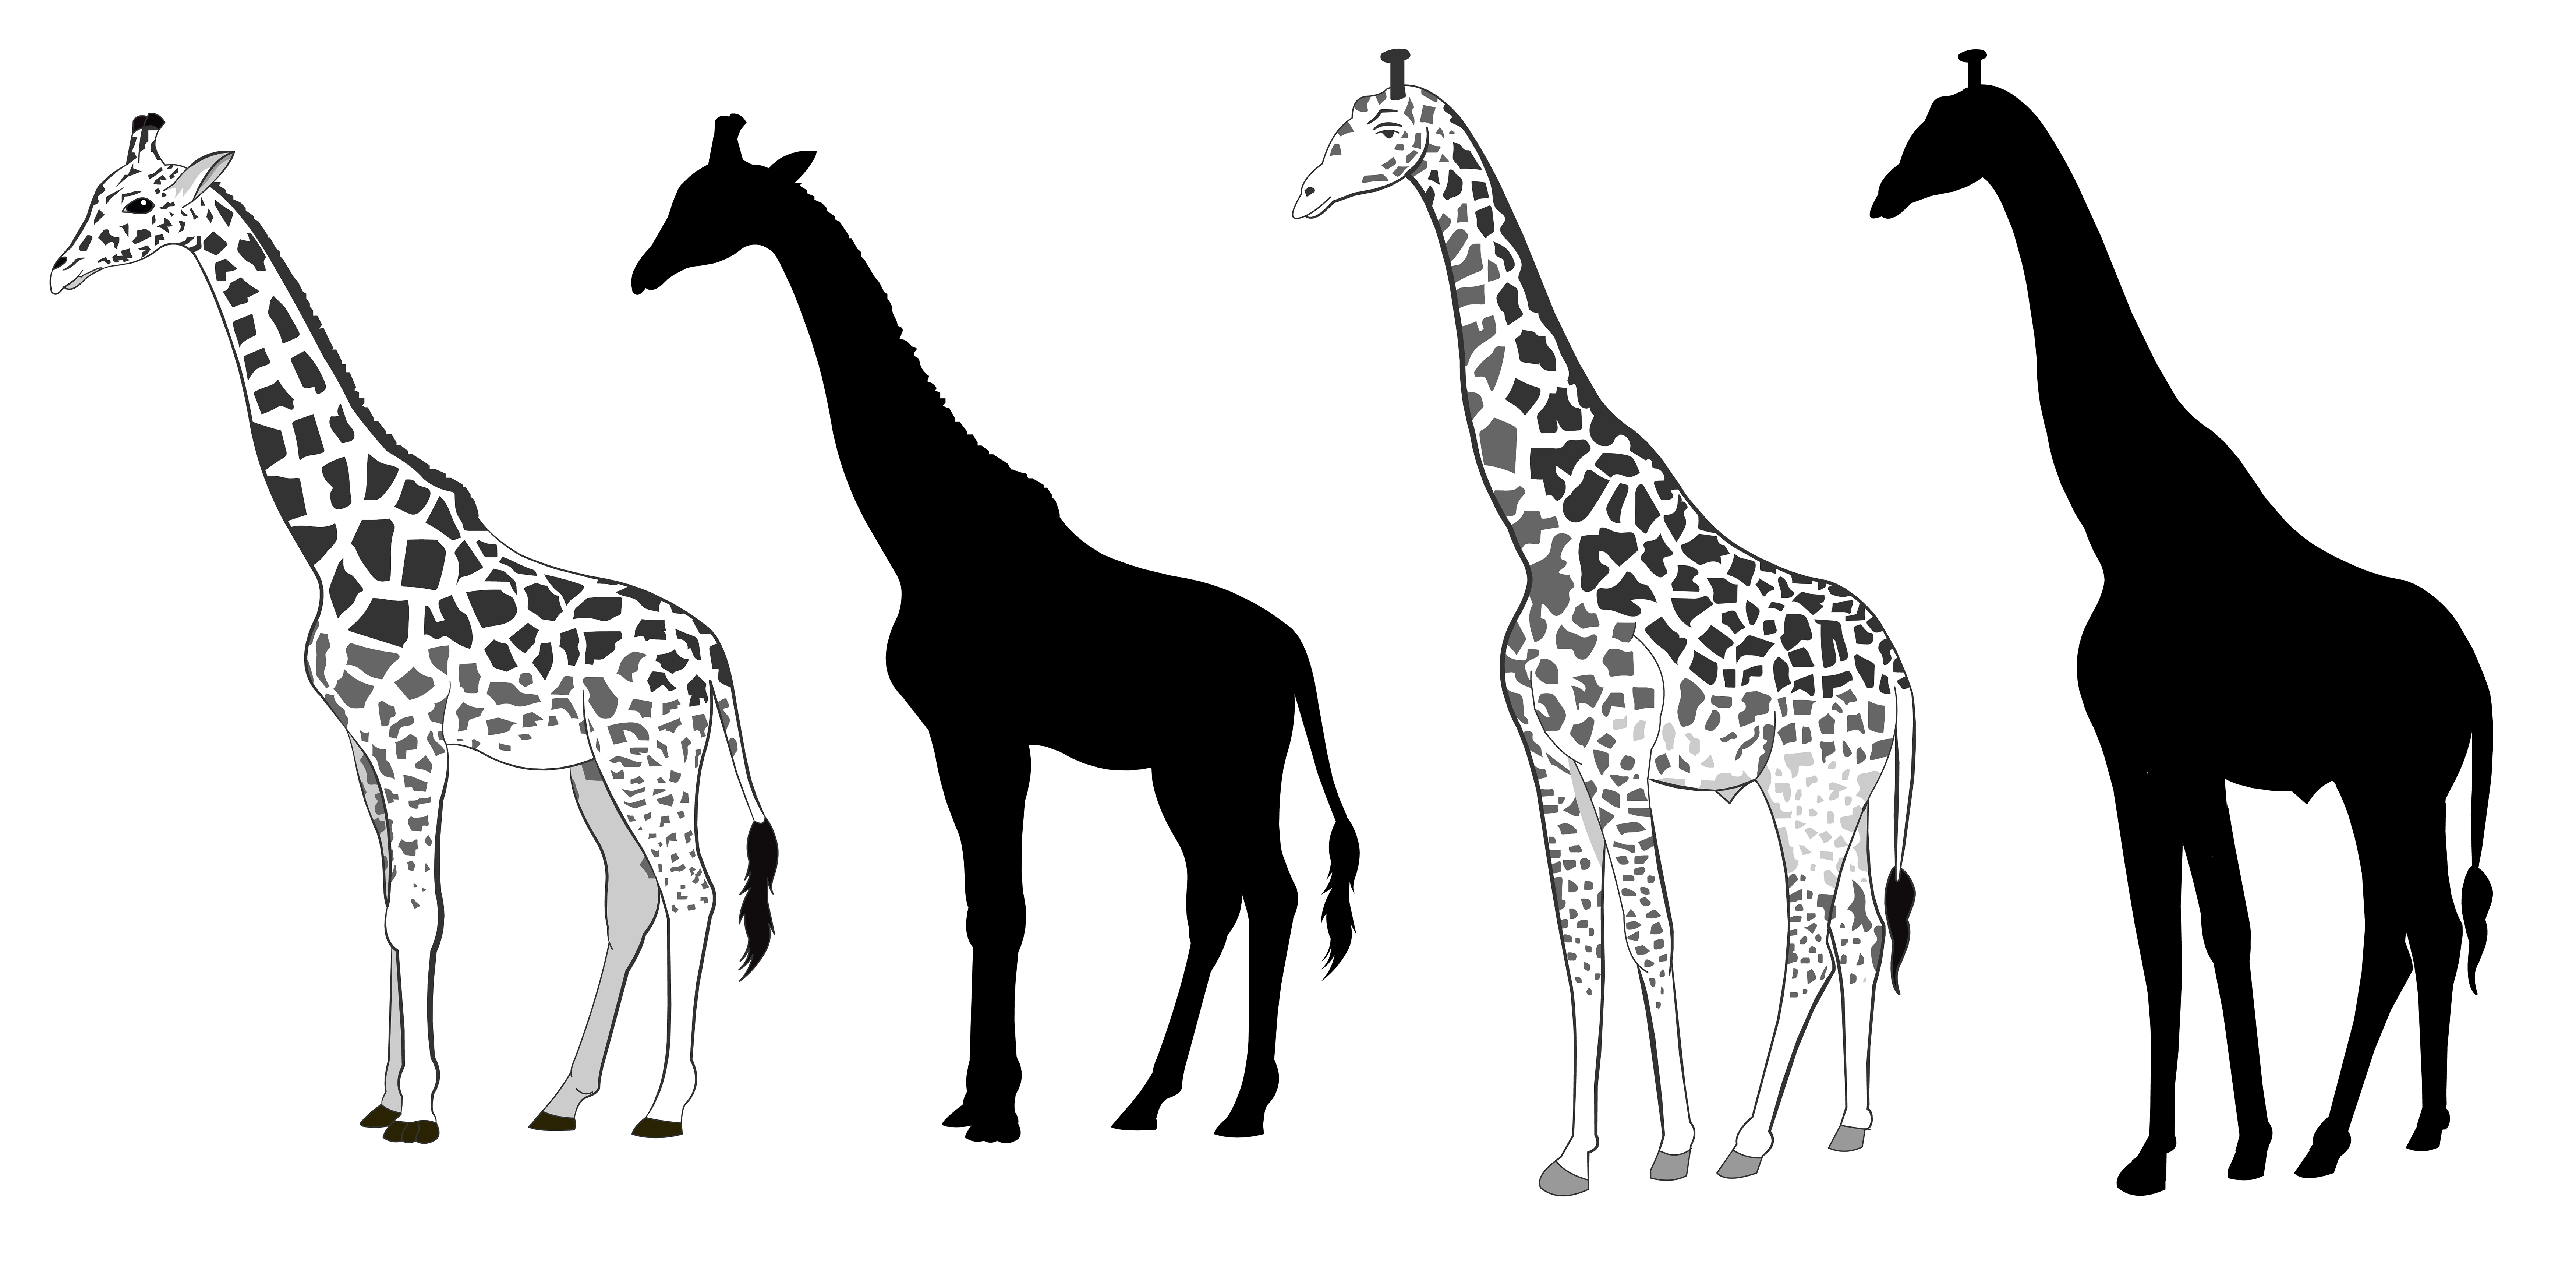 Download Giraffe silhouette - Download Free Vectors, Clipart ...